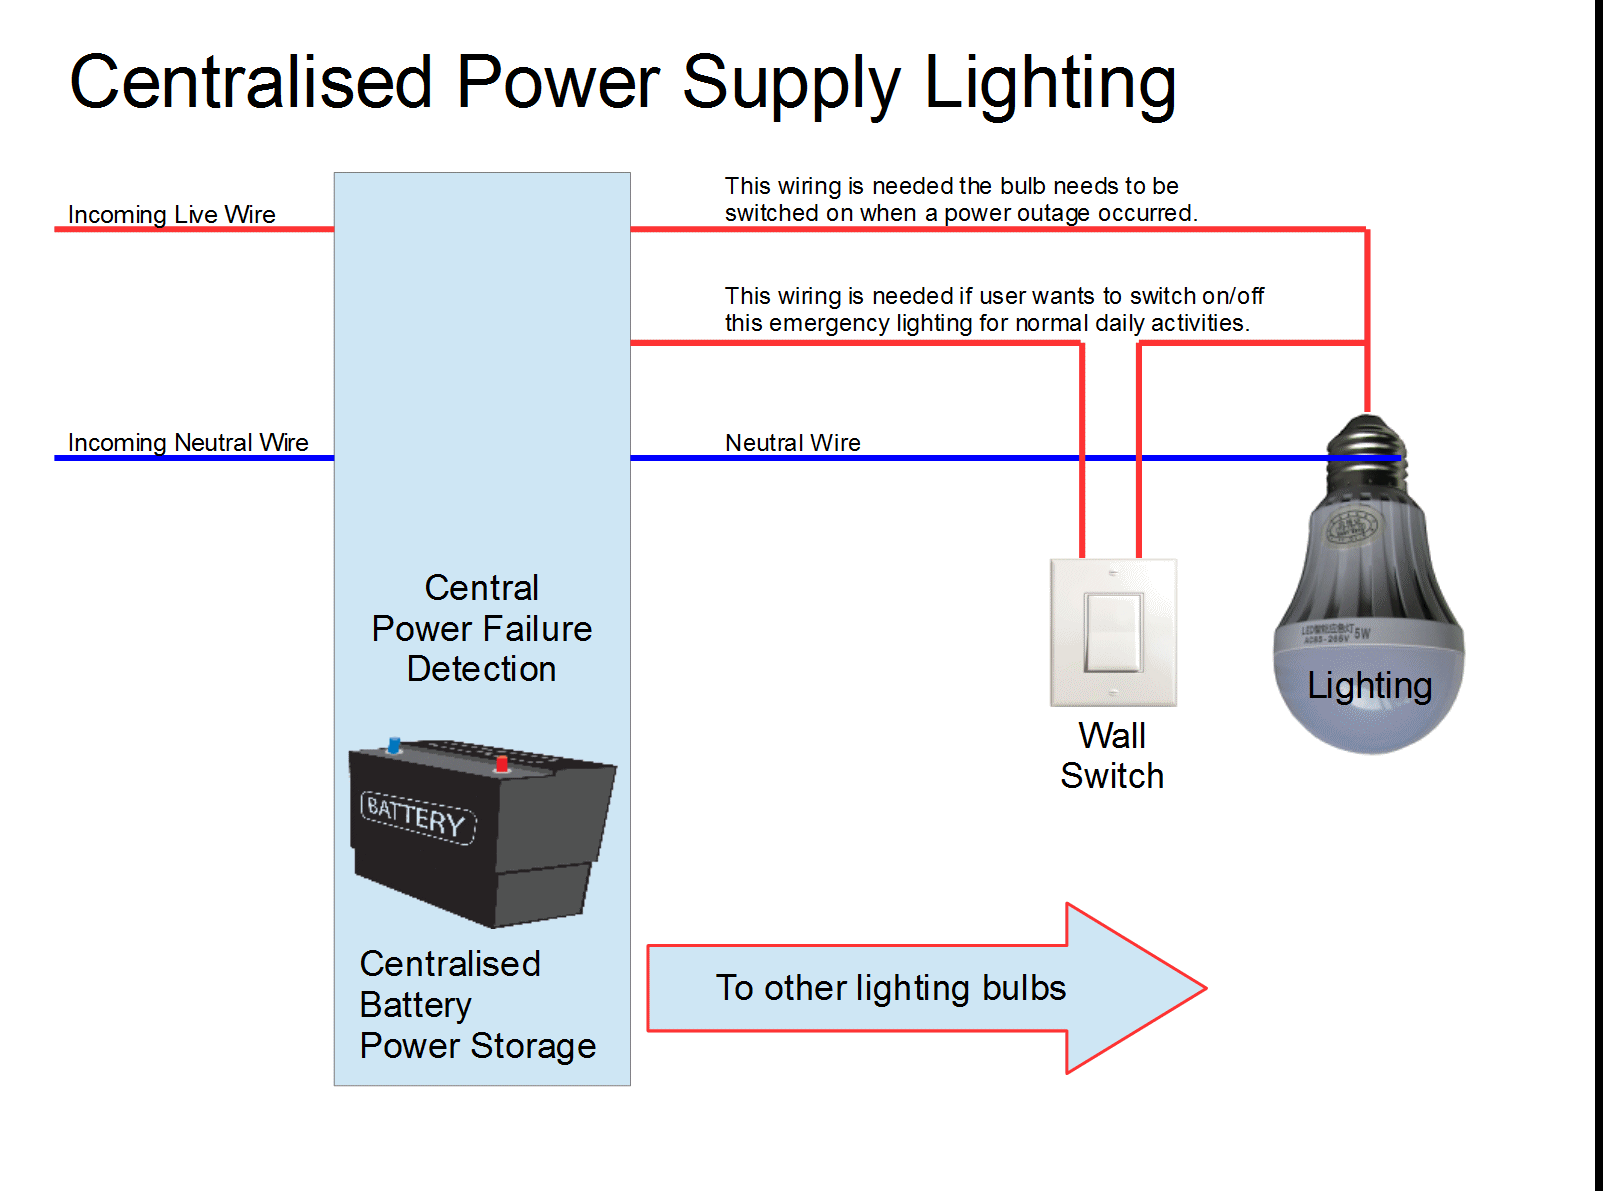 Centralised Power Supply System for Emergency Lighting